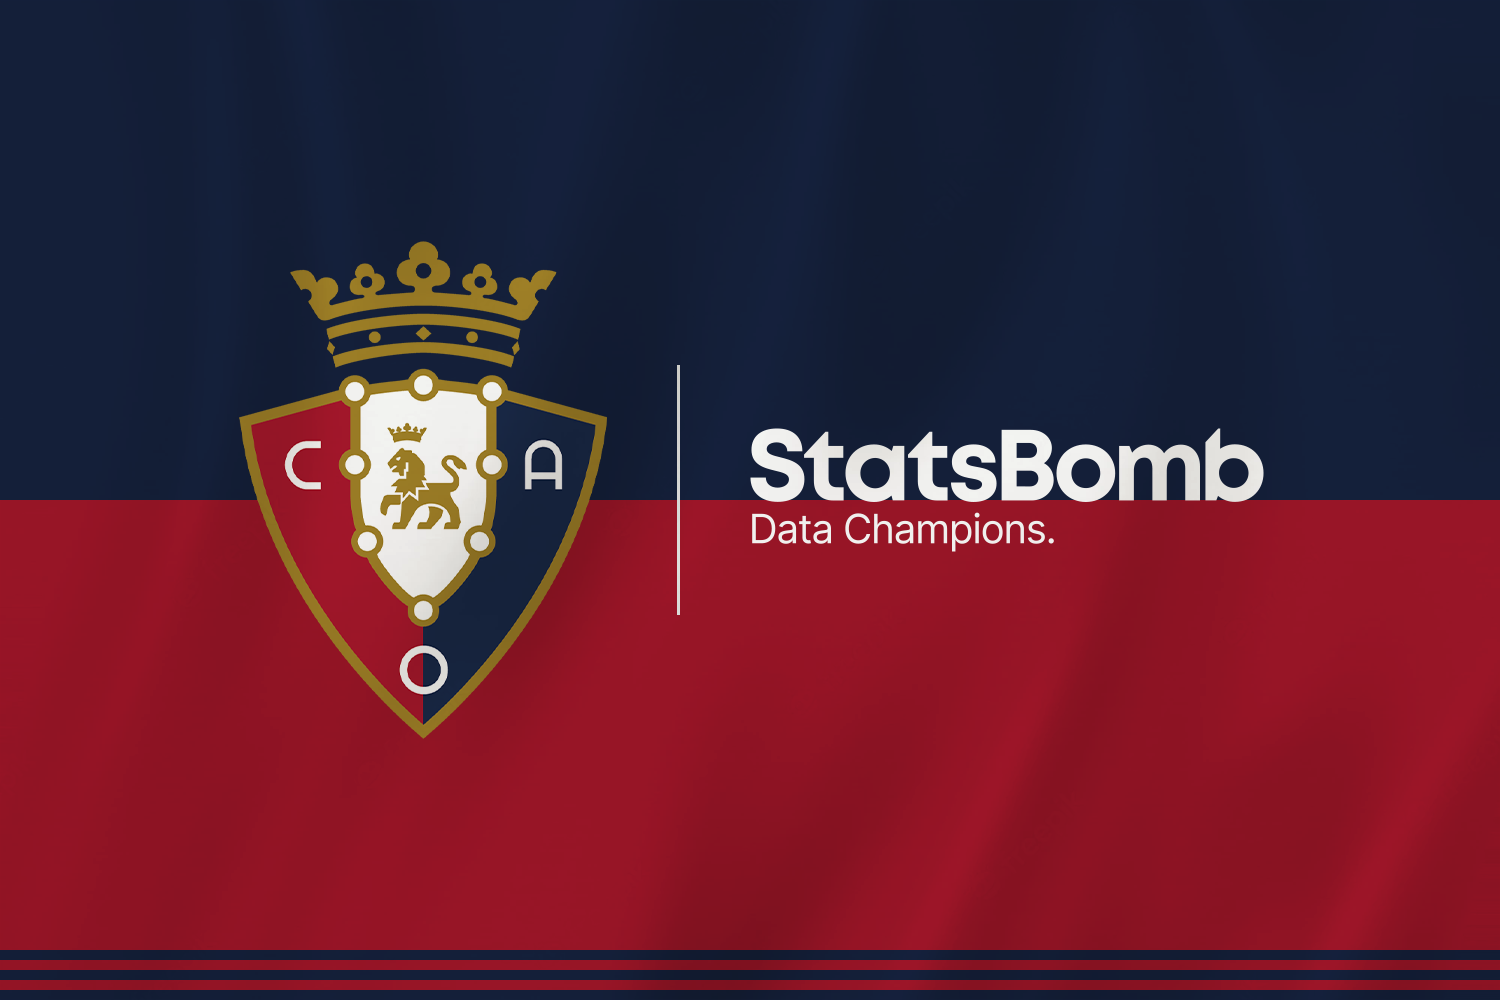 StatsBomb Expand Spanish Presence with CA Osasuna Partnership